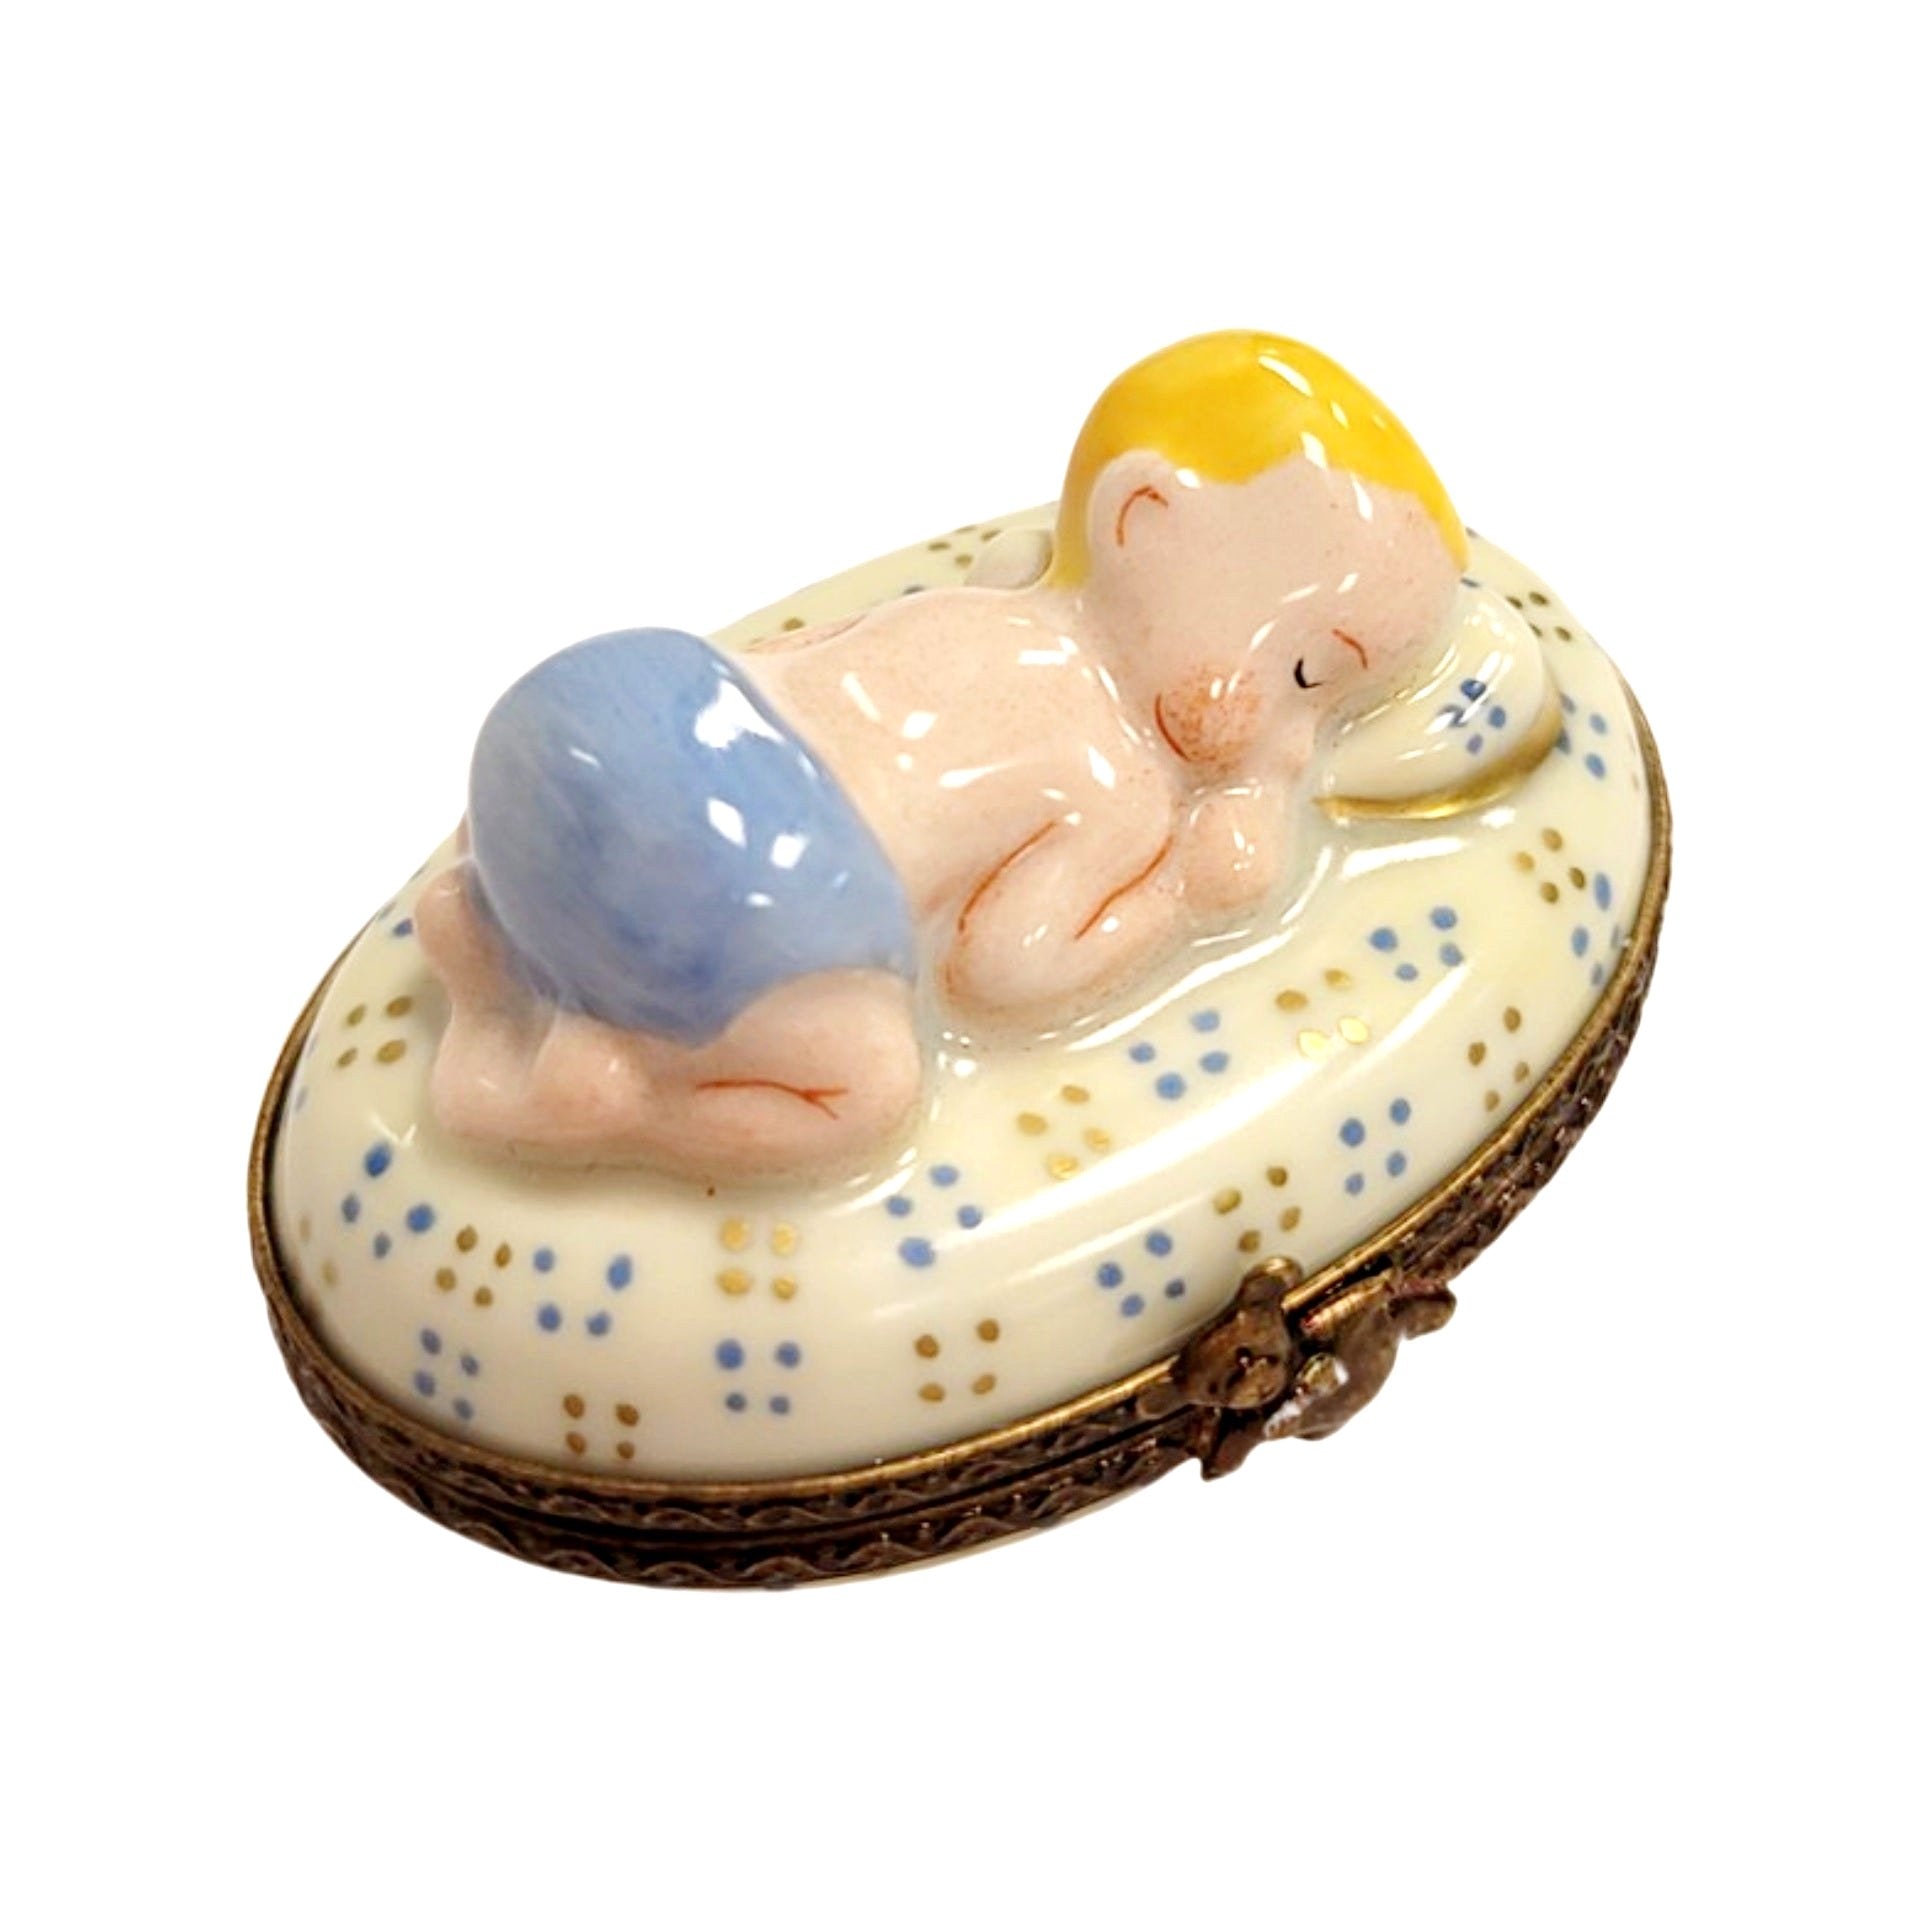 Blue Baby Sleeping Porcelain Limoges Trinket Box